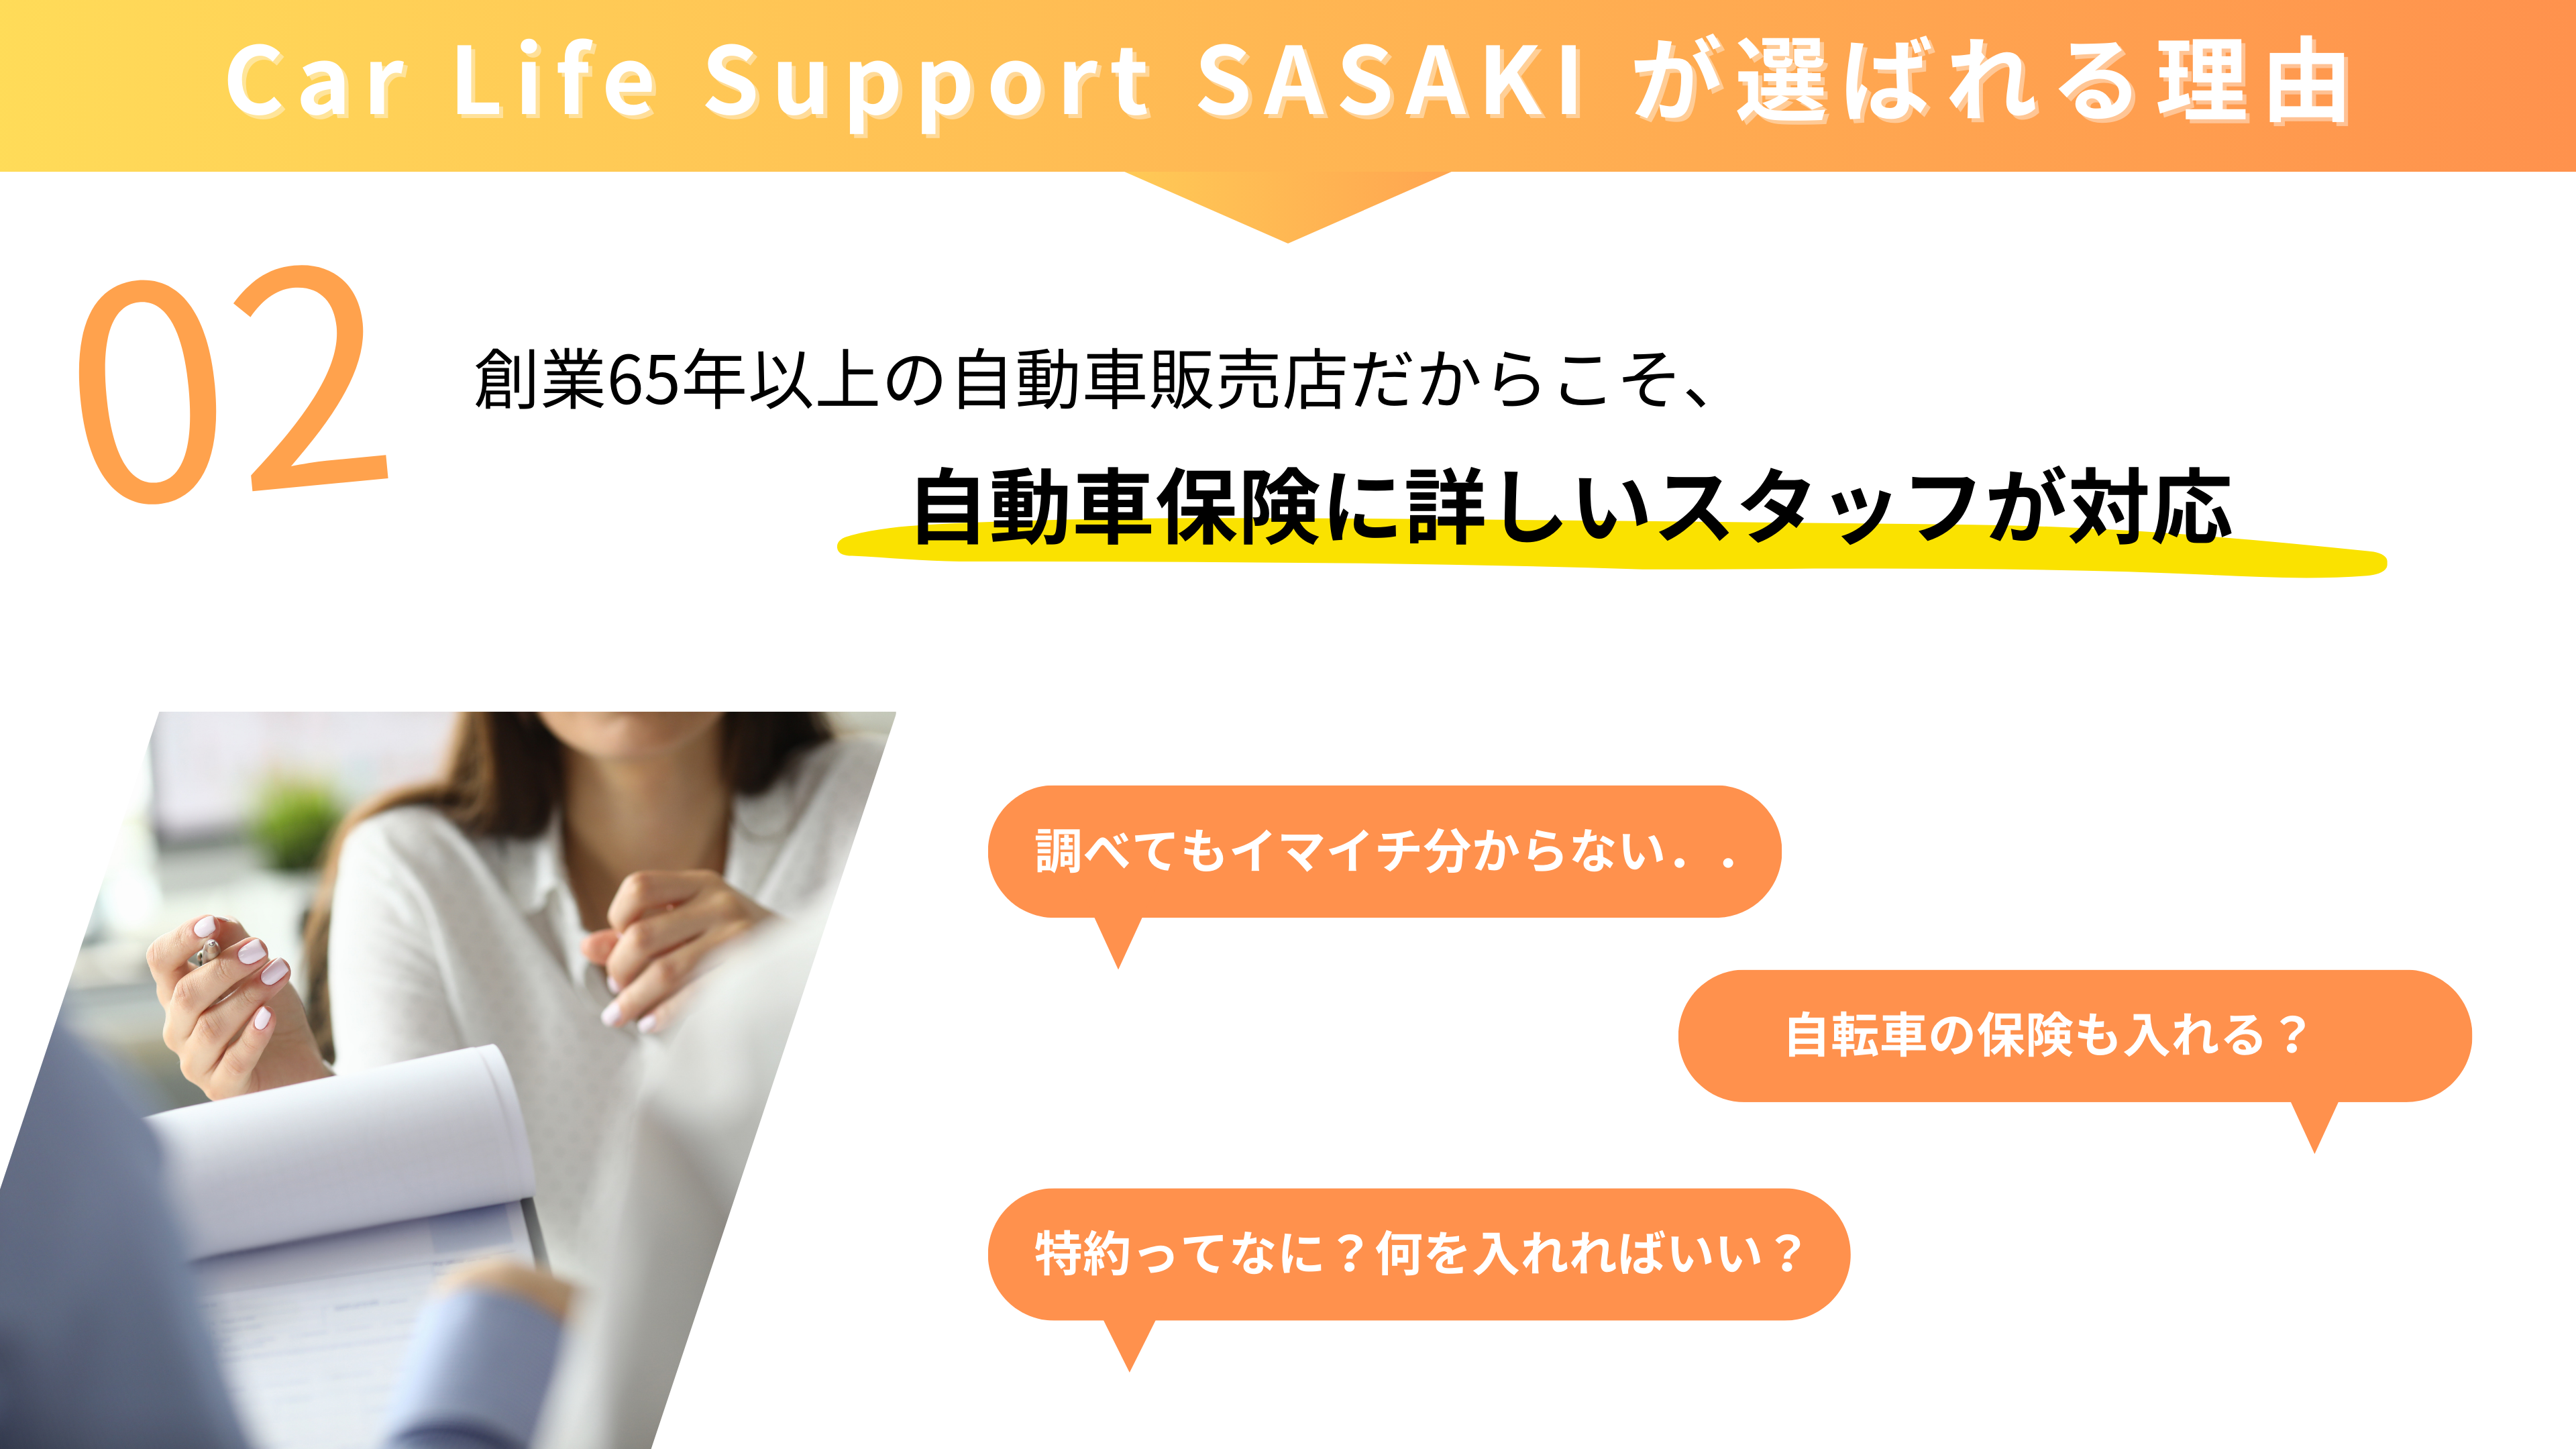 Car Life Support SASAKI が選ばれる理由2 創業65年以上の自動車販売店だからこそ、自動車保険に詳しいスタッフが対応